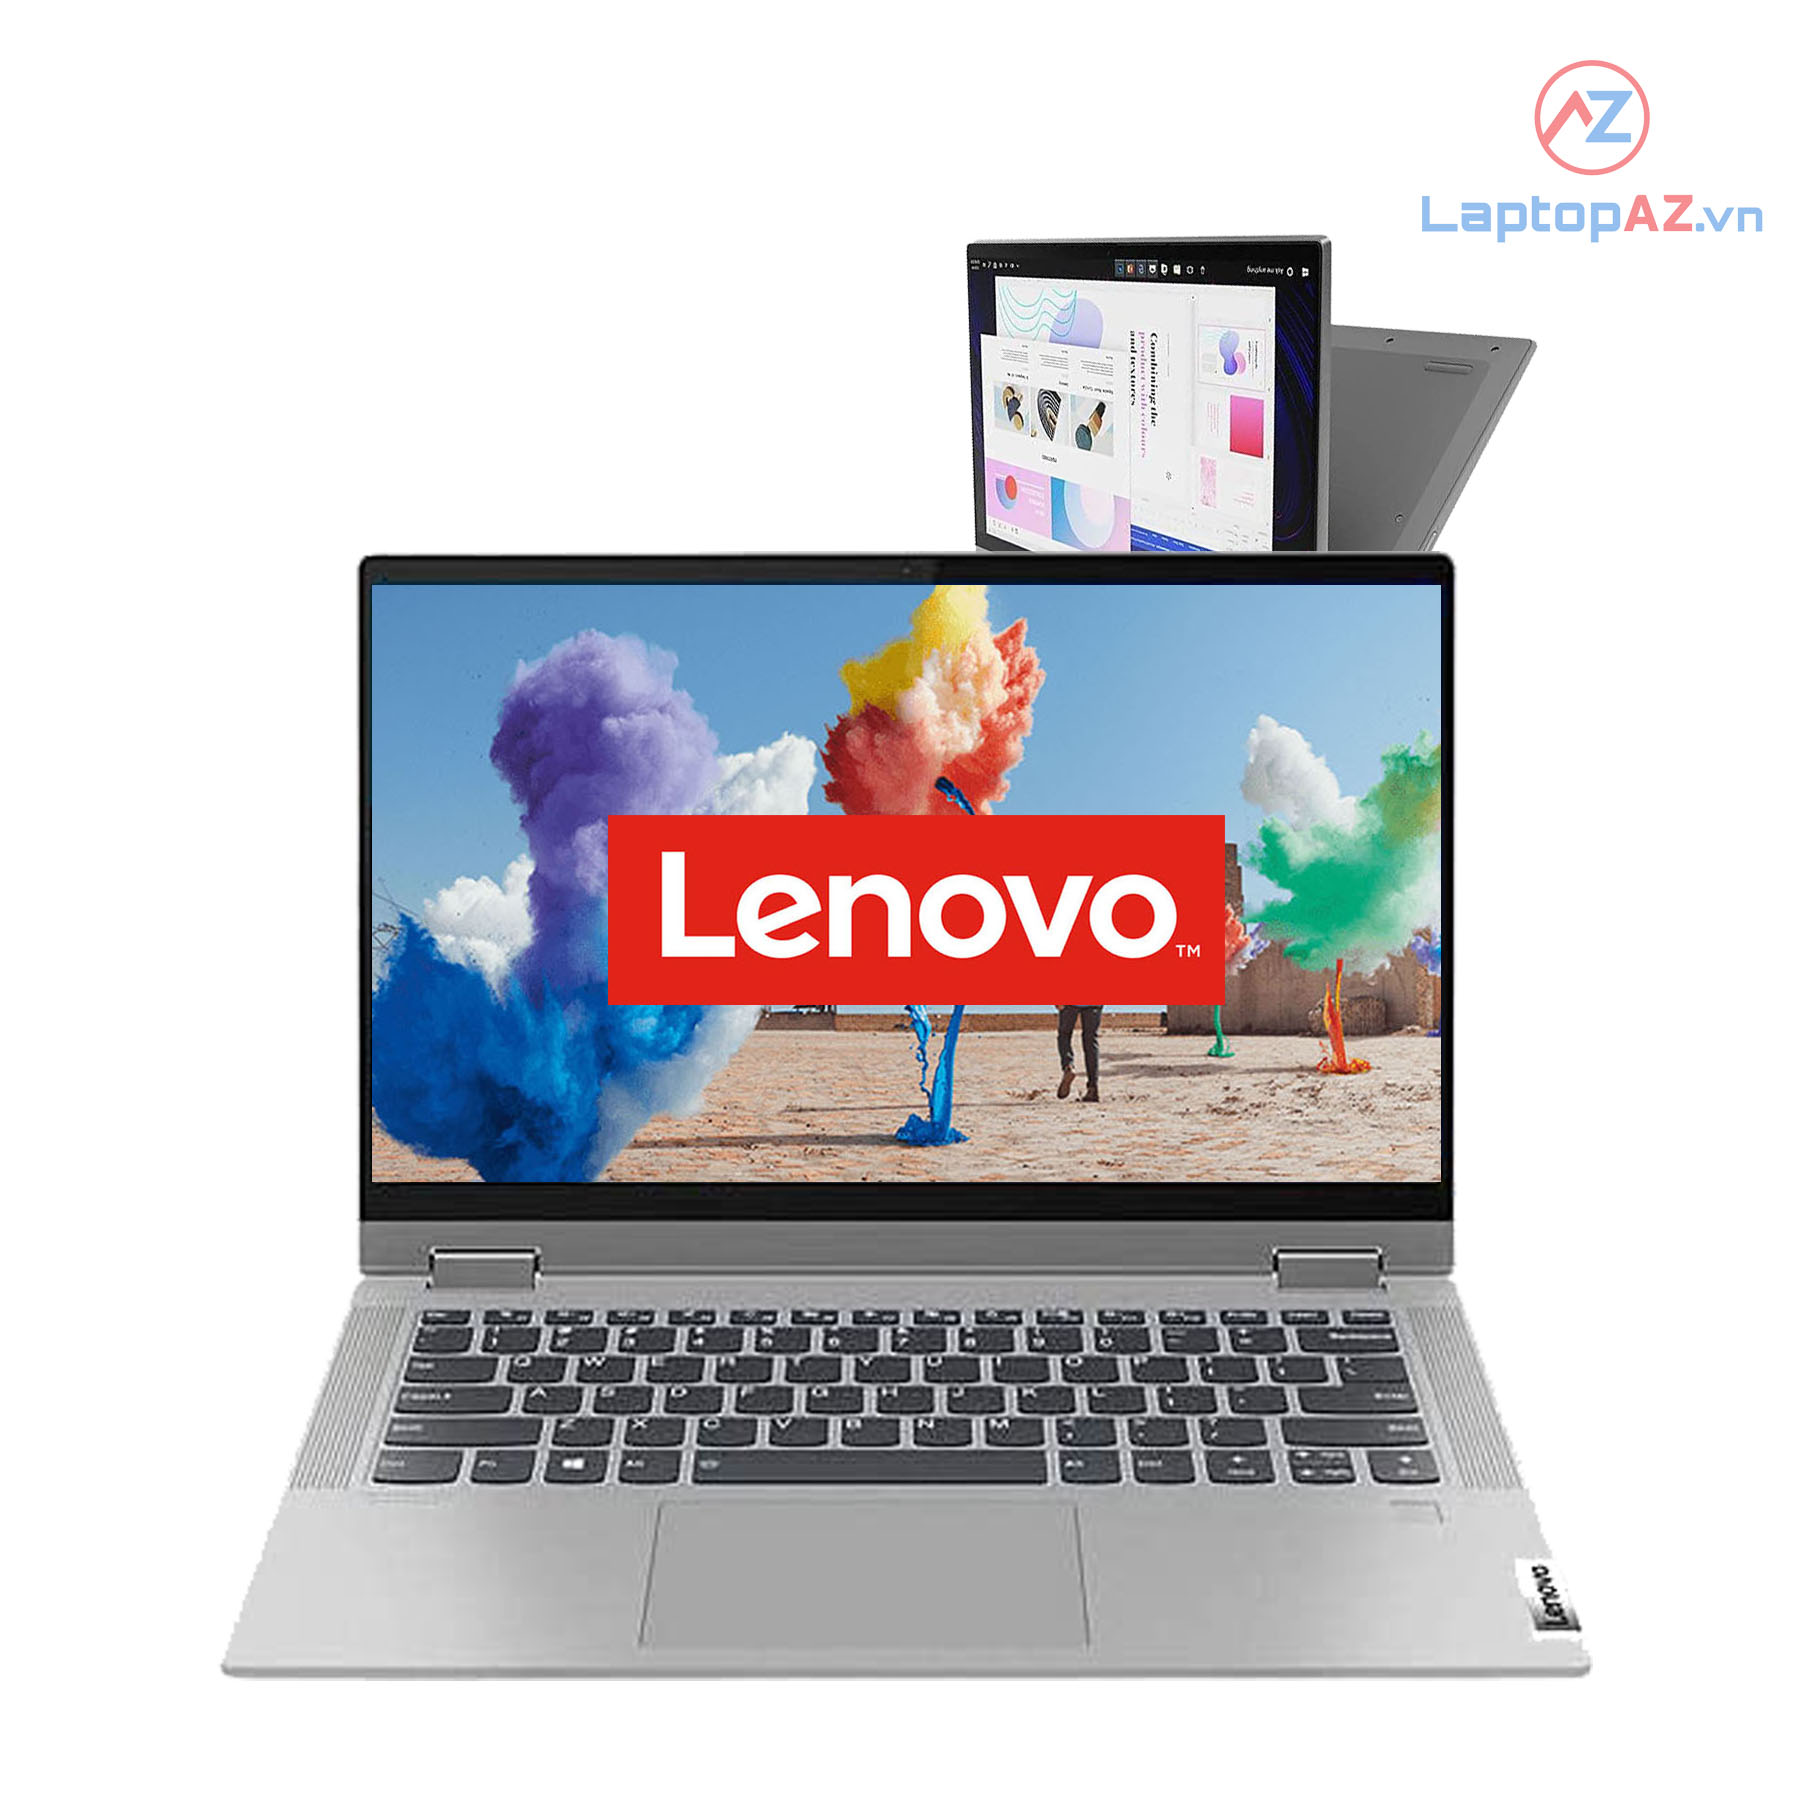 Lenovo Ideapad Flex 5 14ITL05 Core i5 chính hãng uy tín 